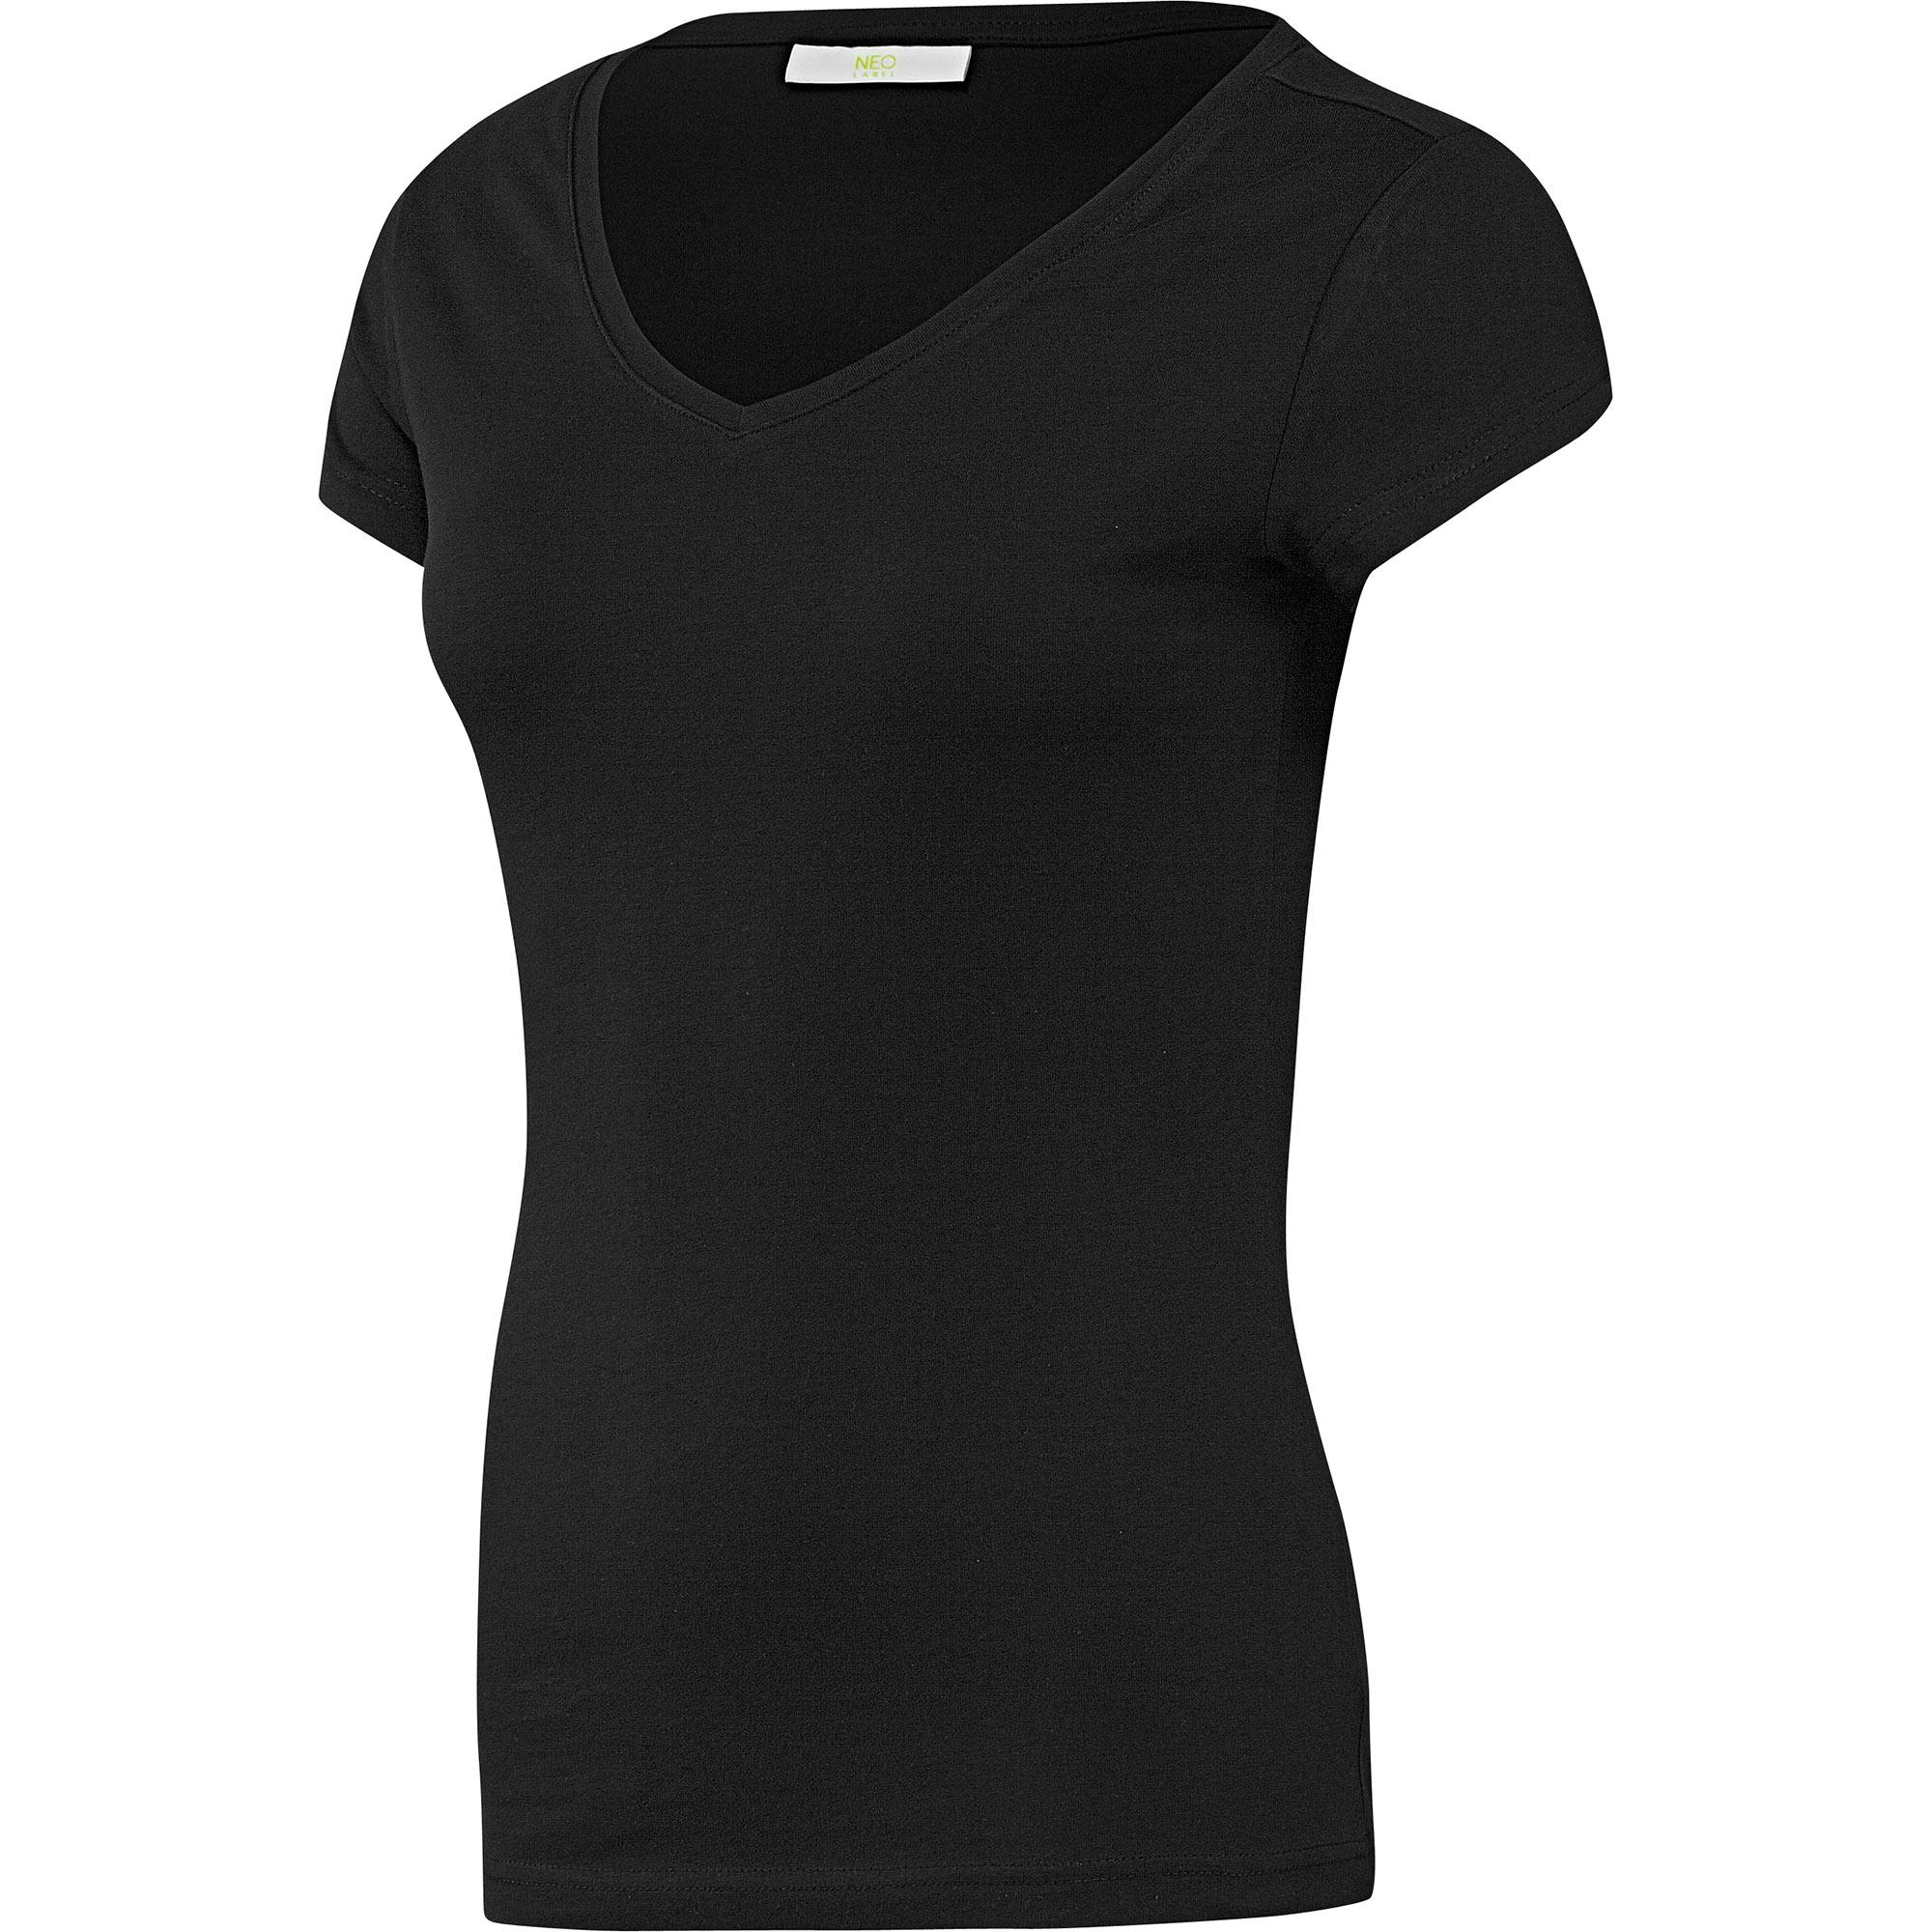 Foto adidas Camiseta de cuello de pico Fashion Basics Mujer foto 431889